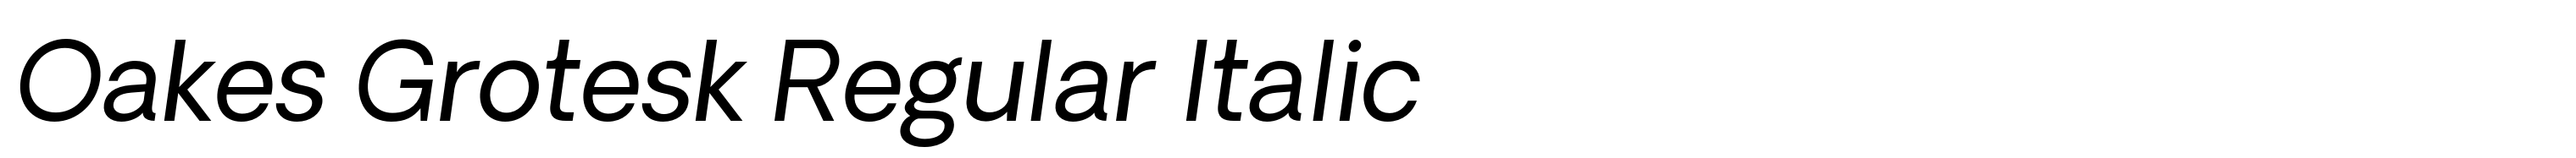 Oakes Grotesk Regular Italic